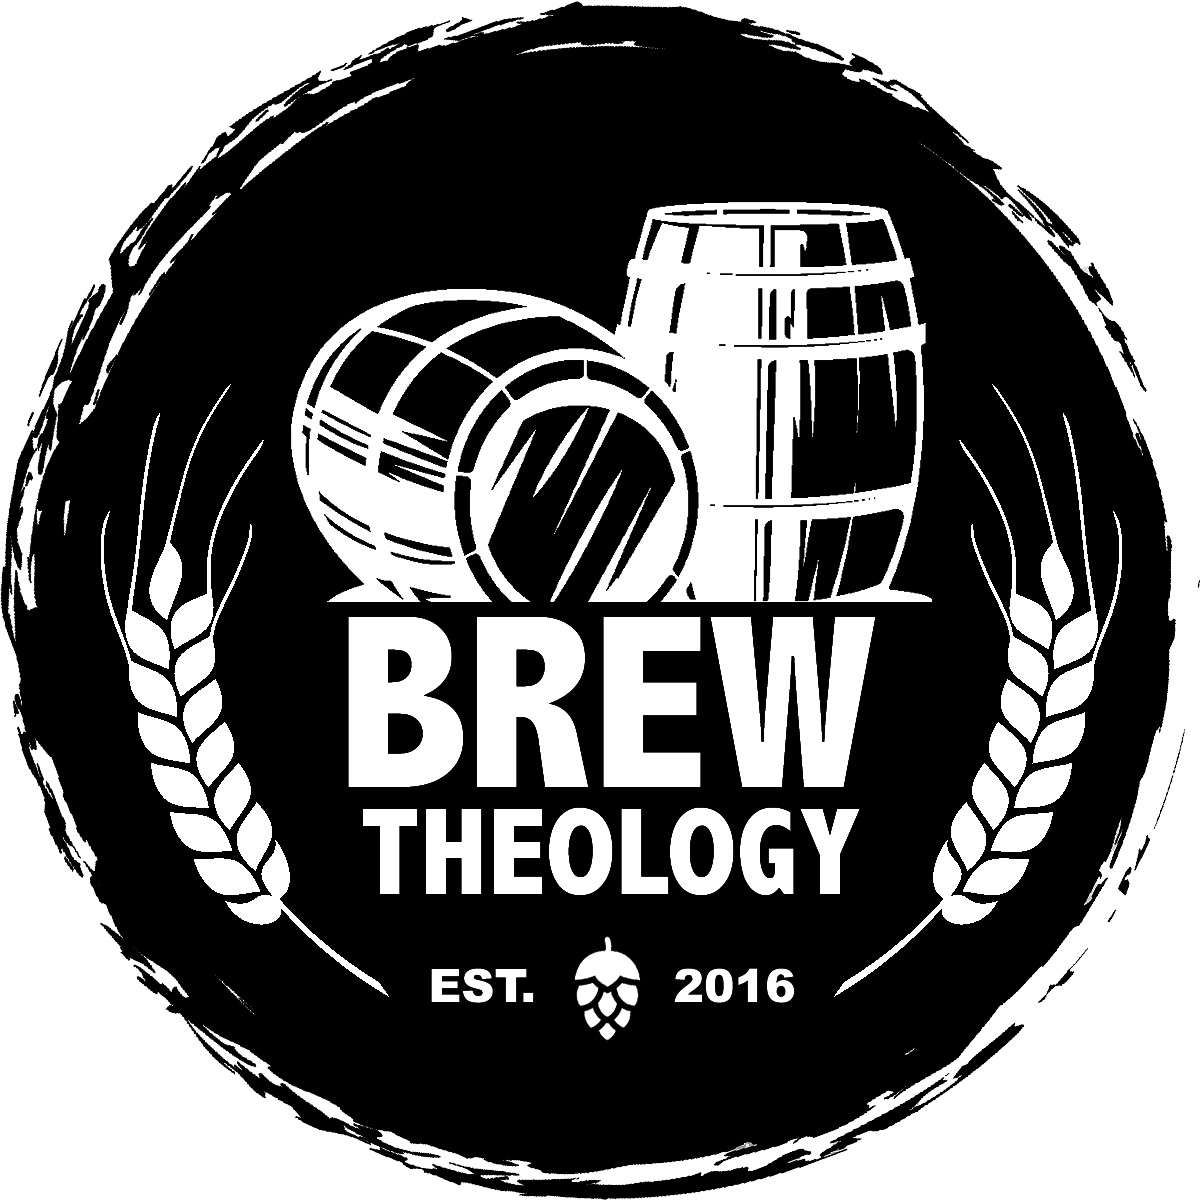 Episode 31: ”Calvinism” with Craig Broek